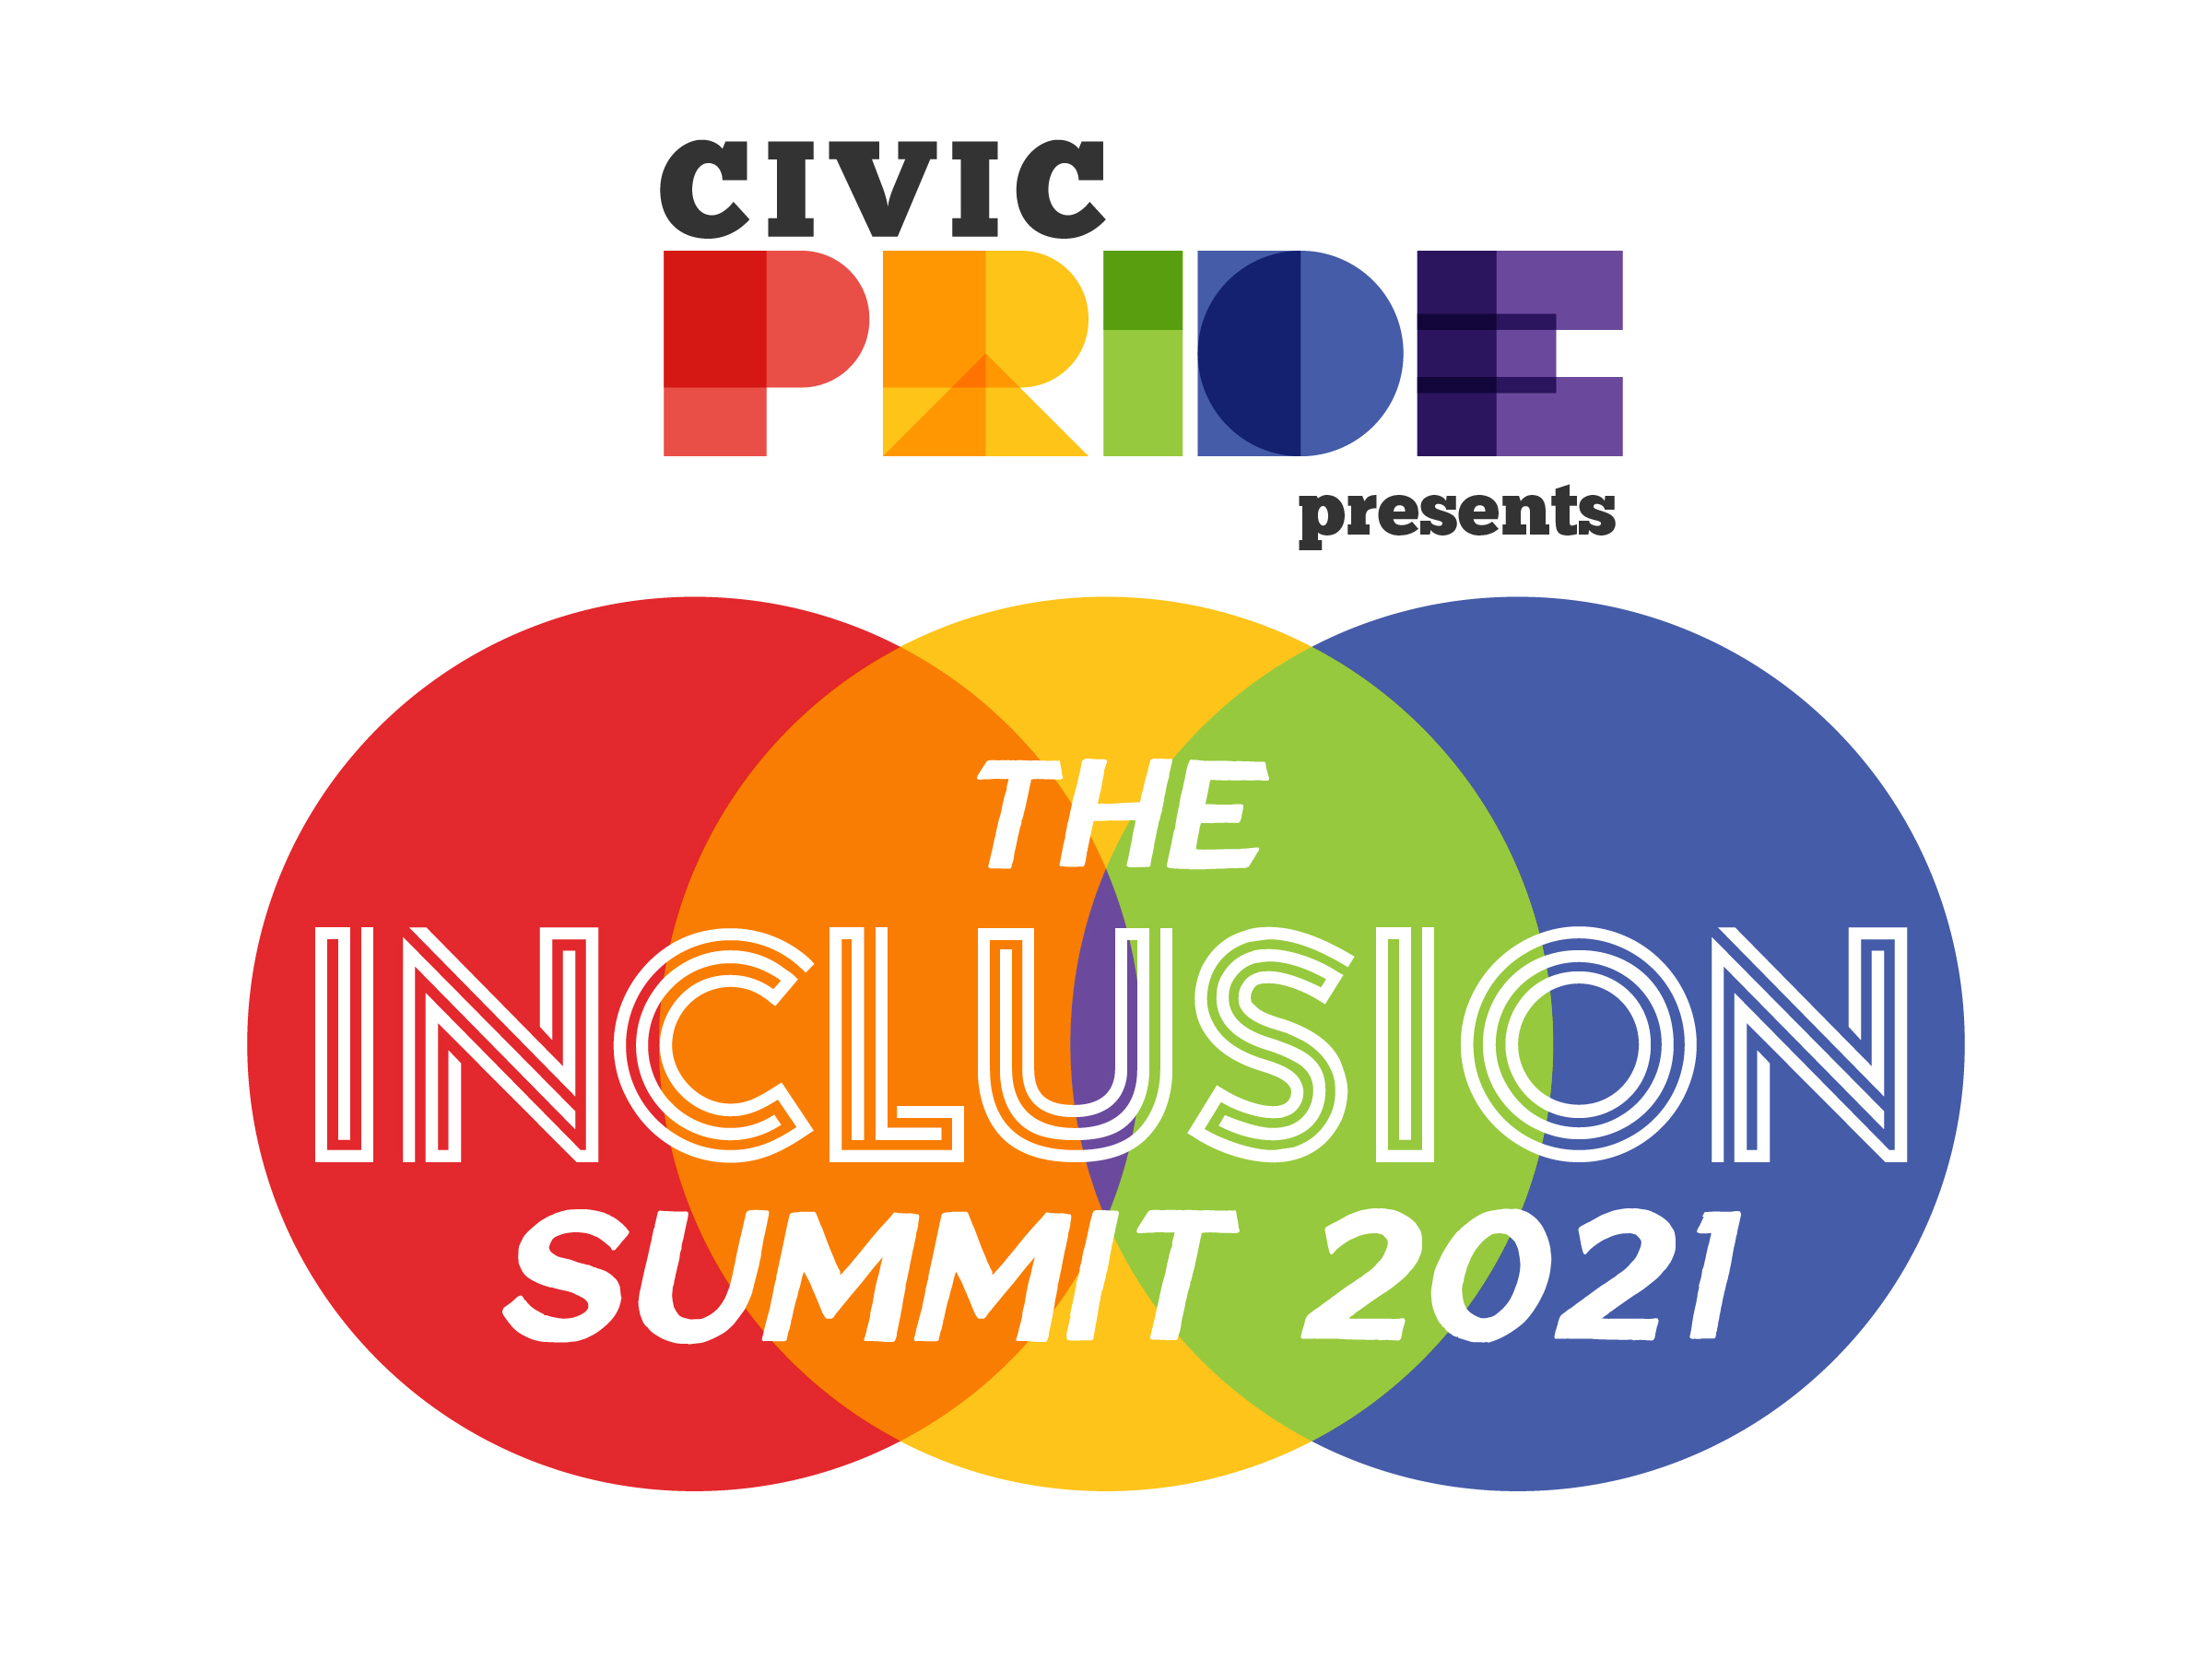 Civic Pride Inclusion Summit lockup logo